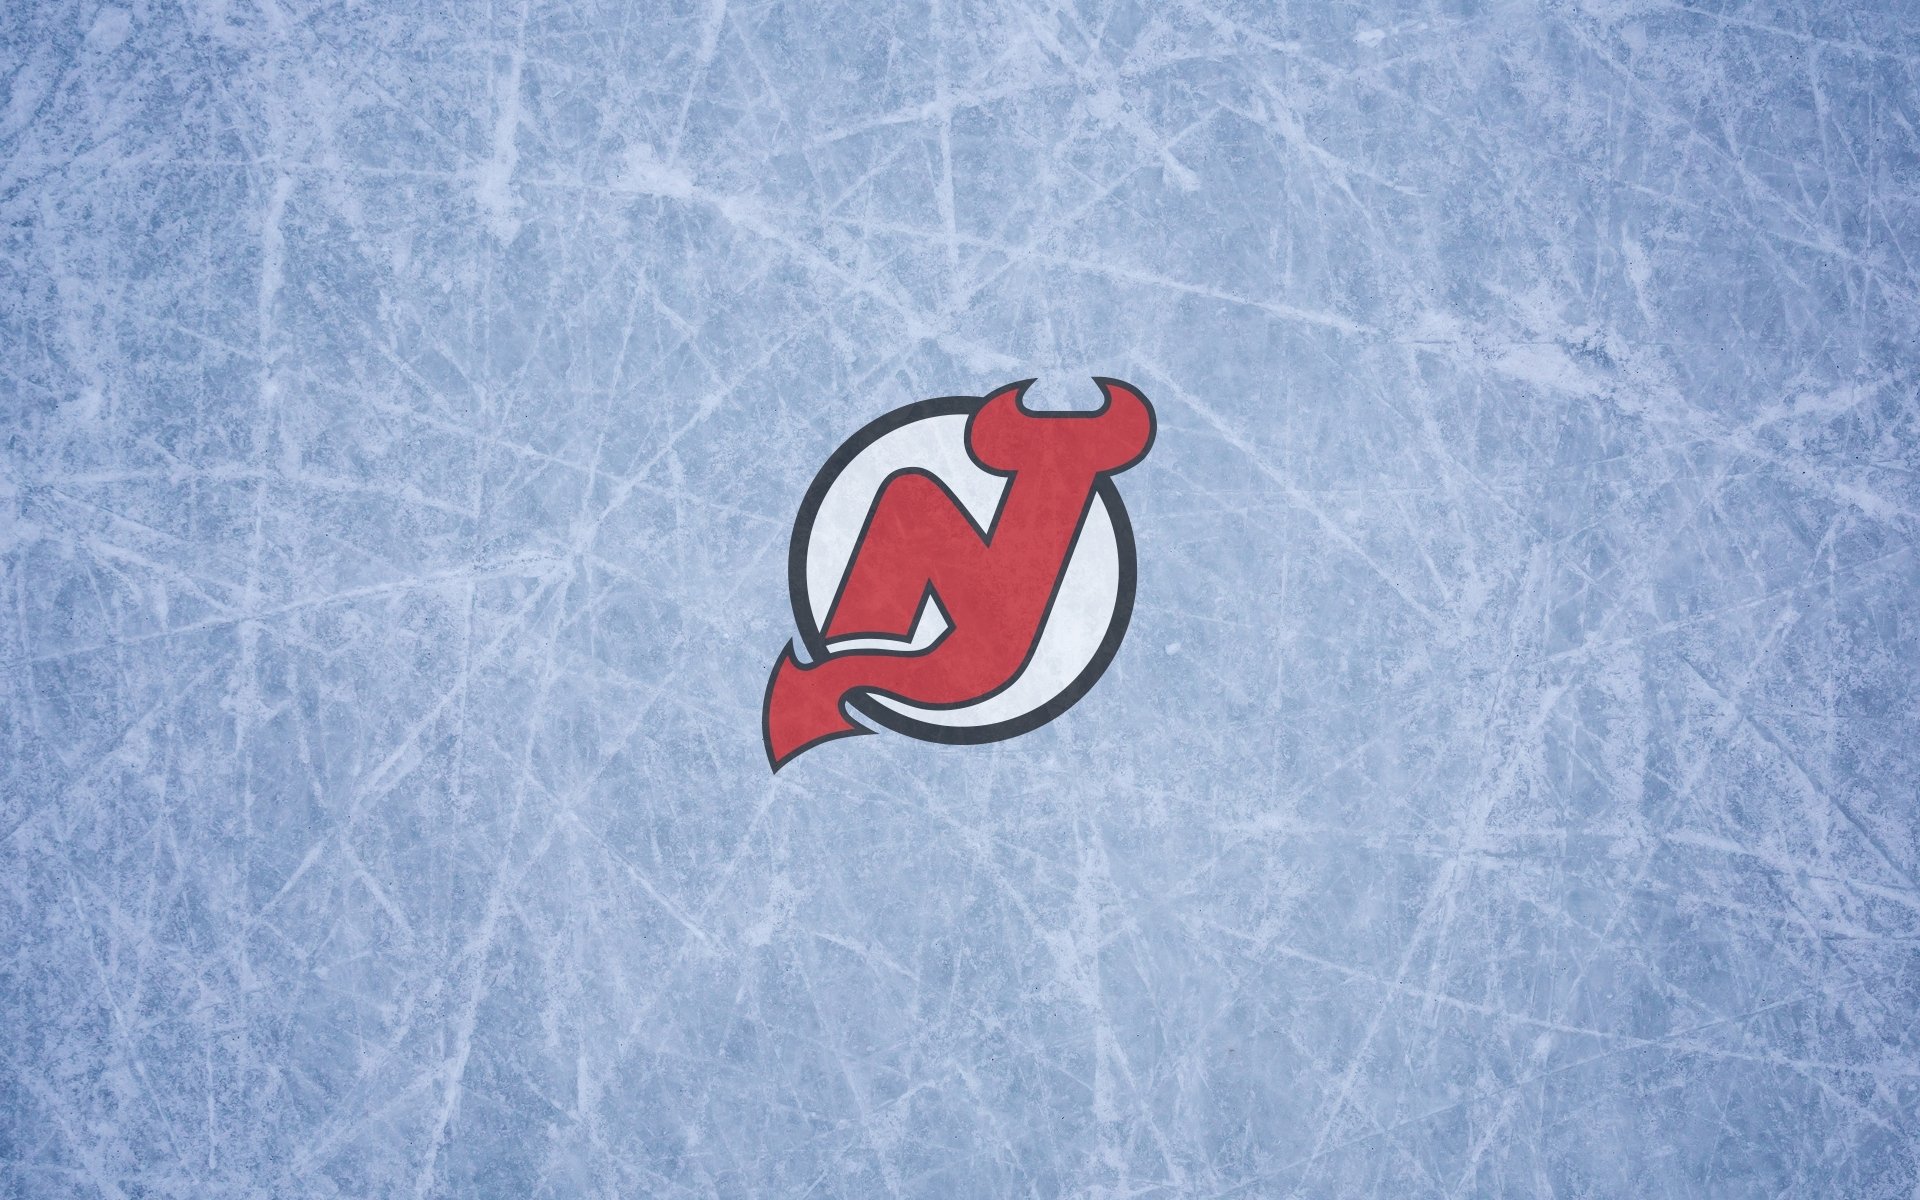 New jersey devils. Логотип Нью-джерси Дэвилз. НХЛ – Нью-джерси Девилз. НХЛ Нью-джерси Девилз эмблема. Хк Нью джерси логотип.